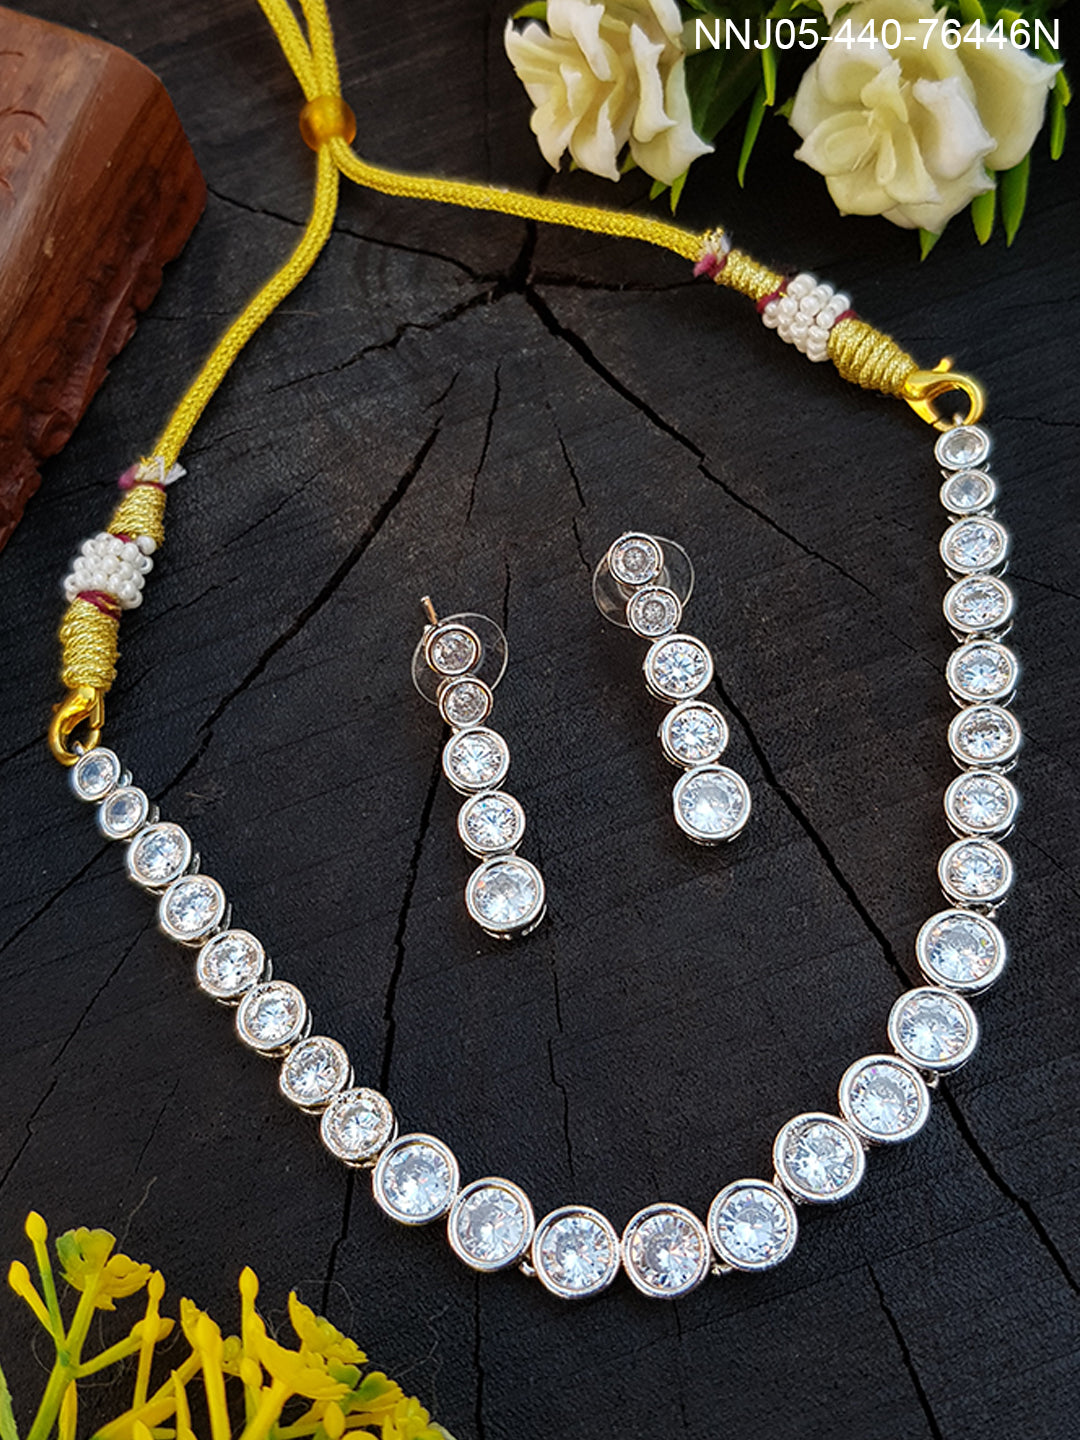 Premium White Gold cz stones Necklace set 7646N